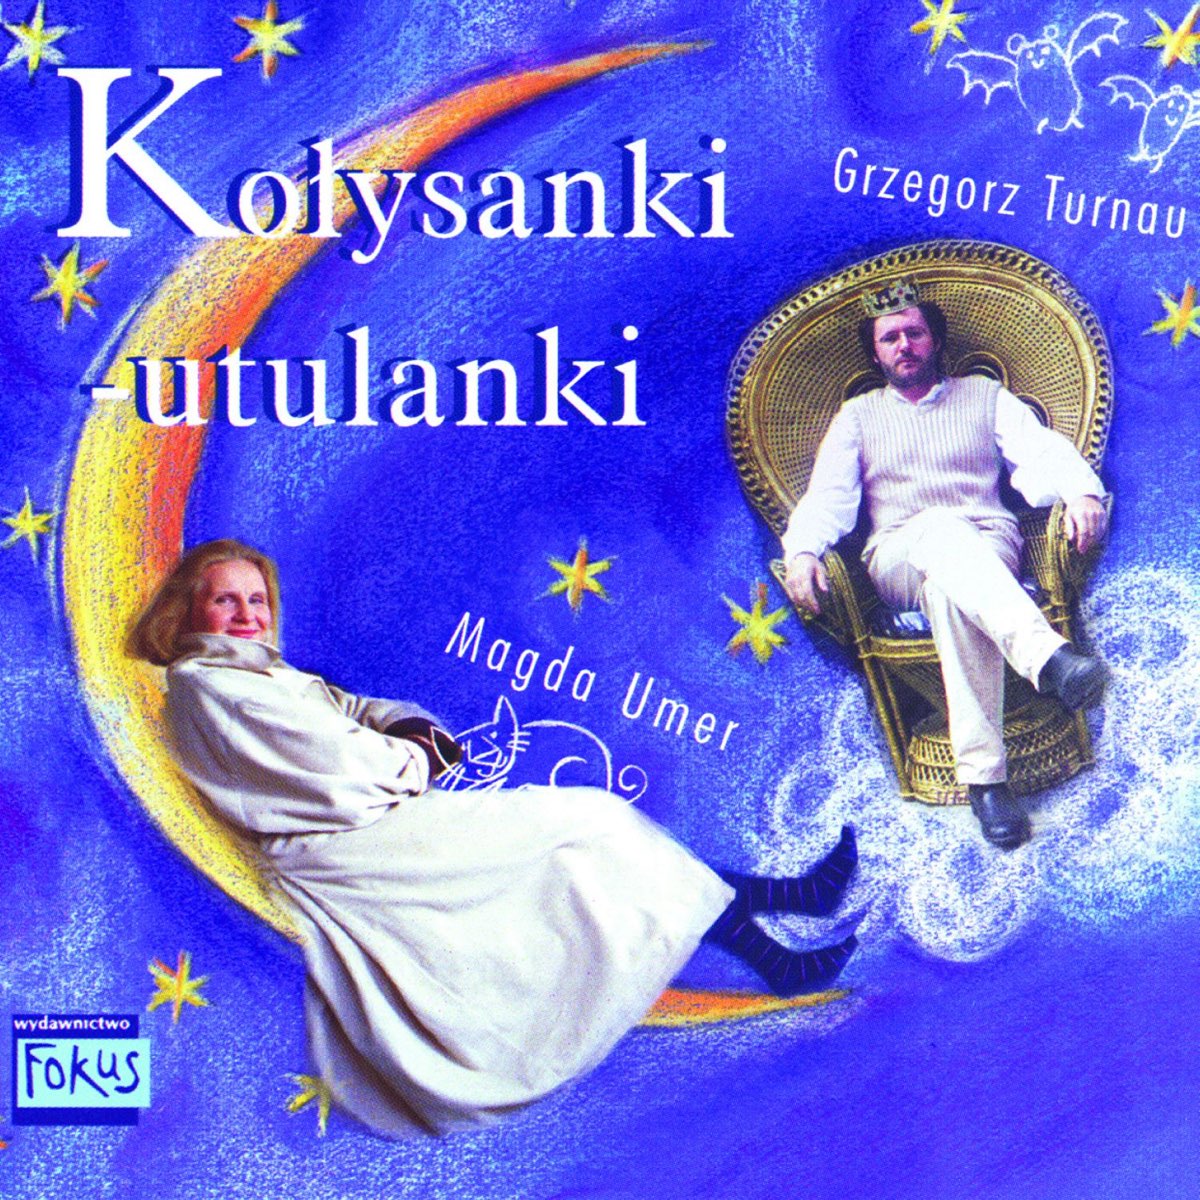 Kolysanki-Utulanki - Album by Grzegorz Turnau & Magda Umer - Apple Music